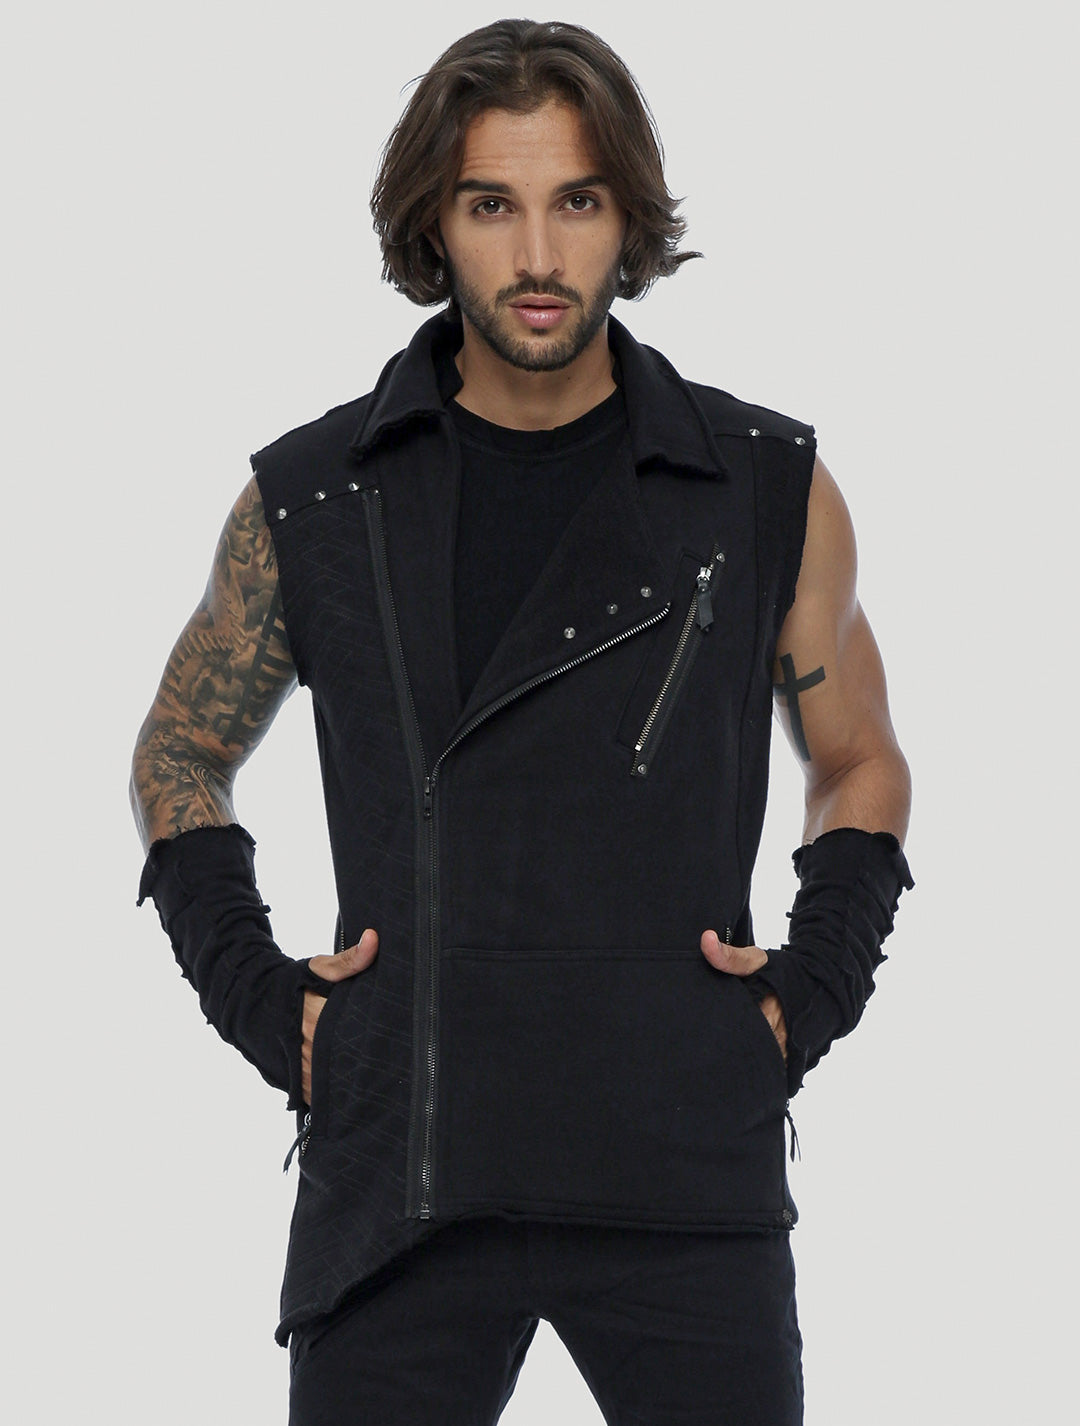 Psylo Fashion Ethical Streetwear - Men Vests Tagged 